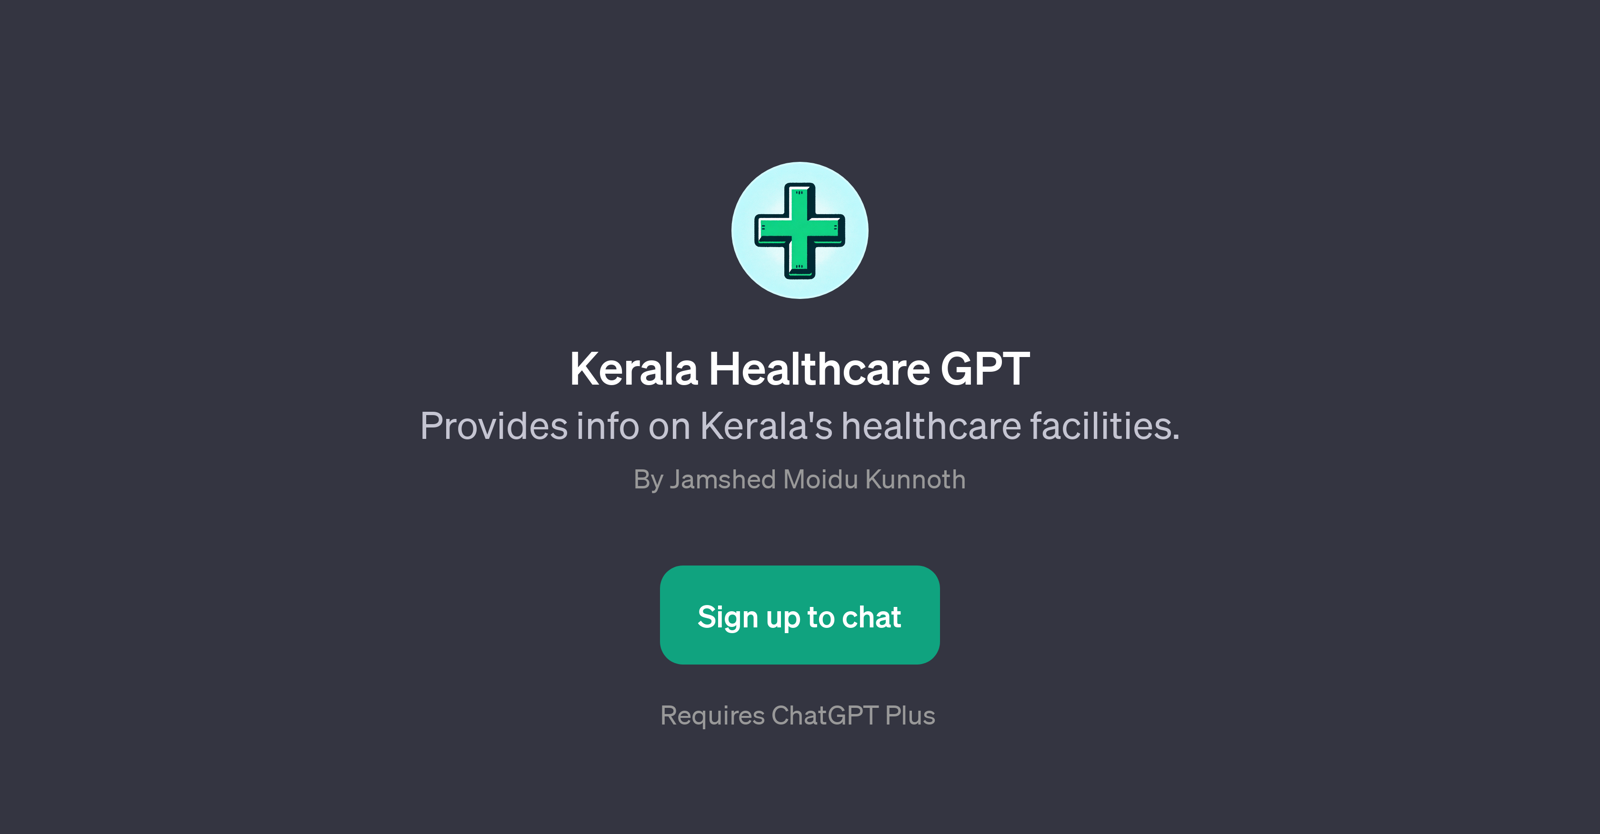 Kerala Healthcare GPT website